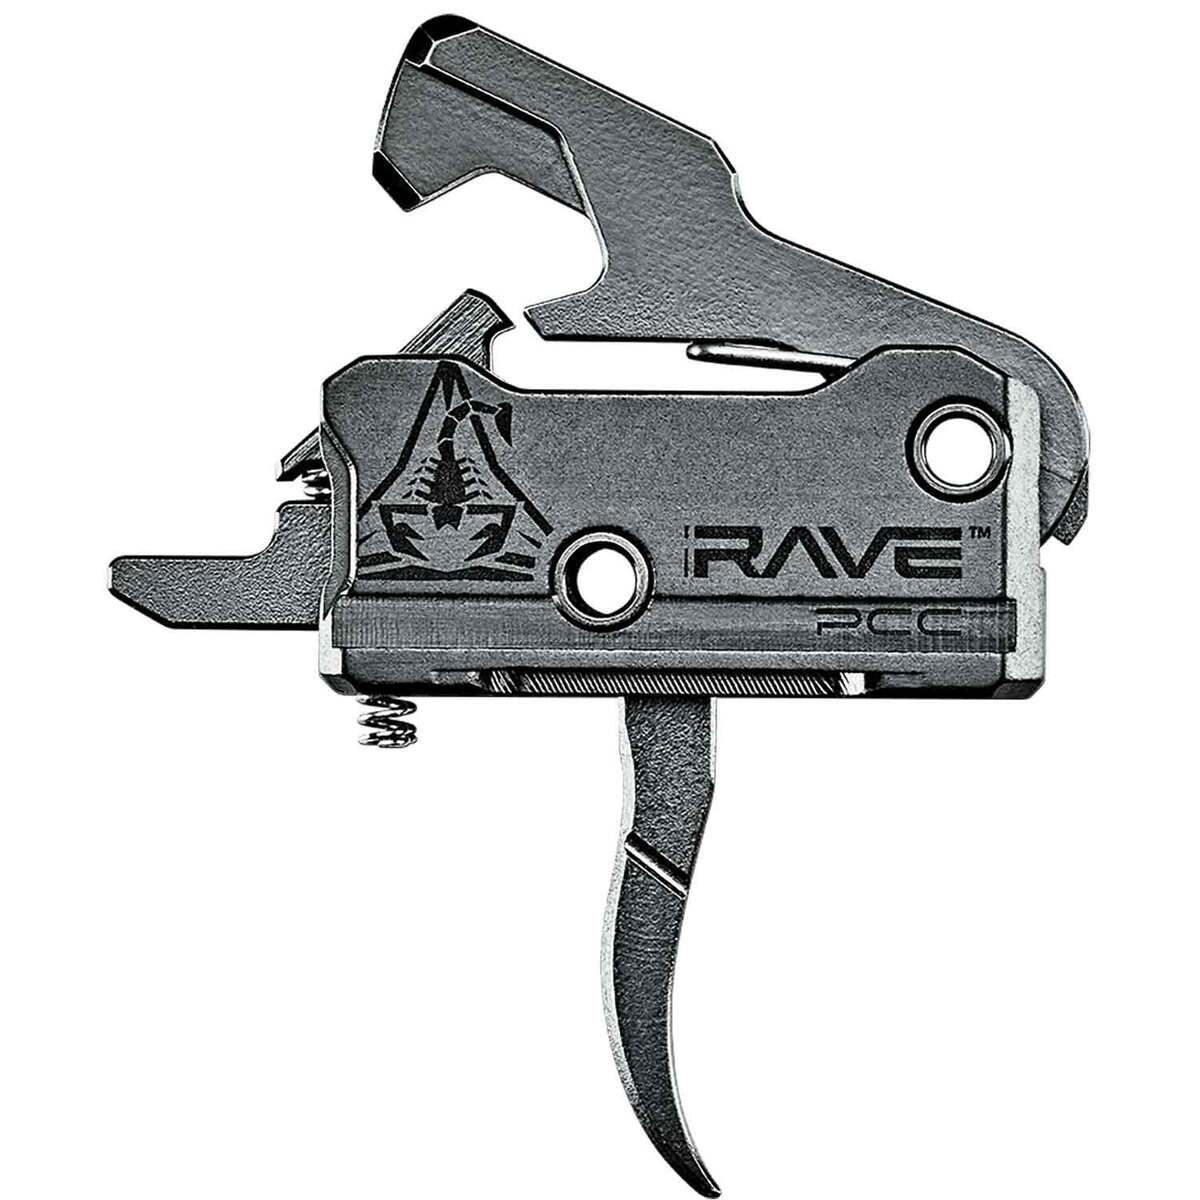 RISE Armament Rave PCC Flat AR9 Single Stage Rifle Trigger | Sportsman ...